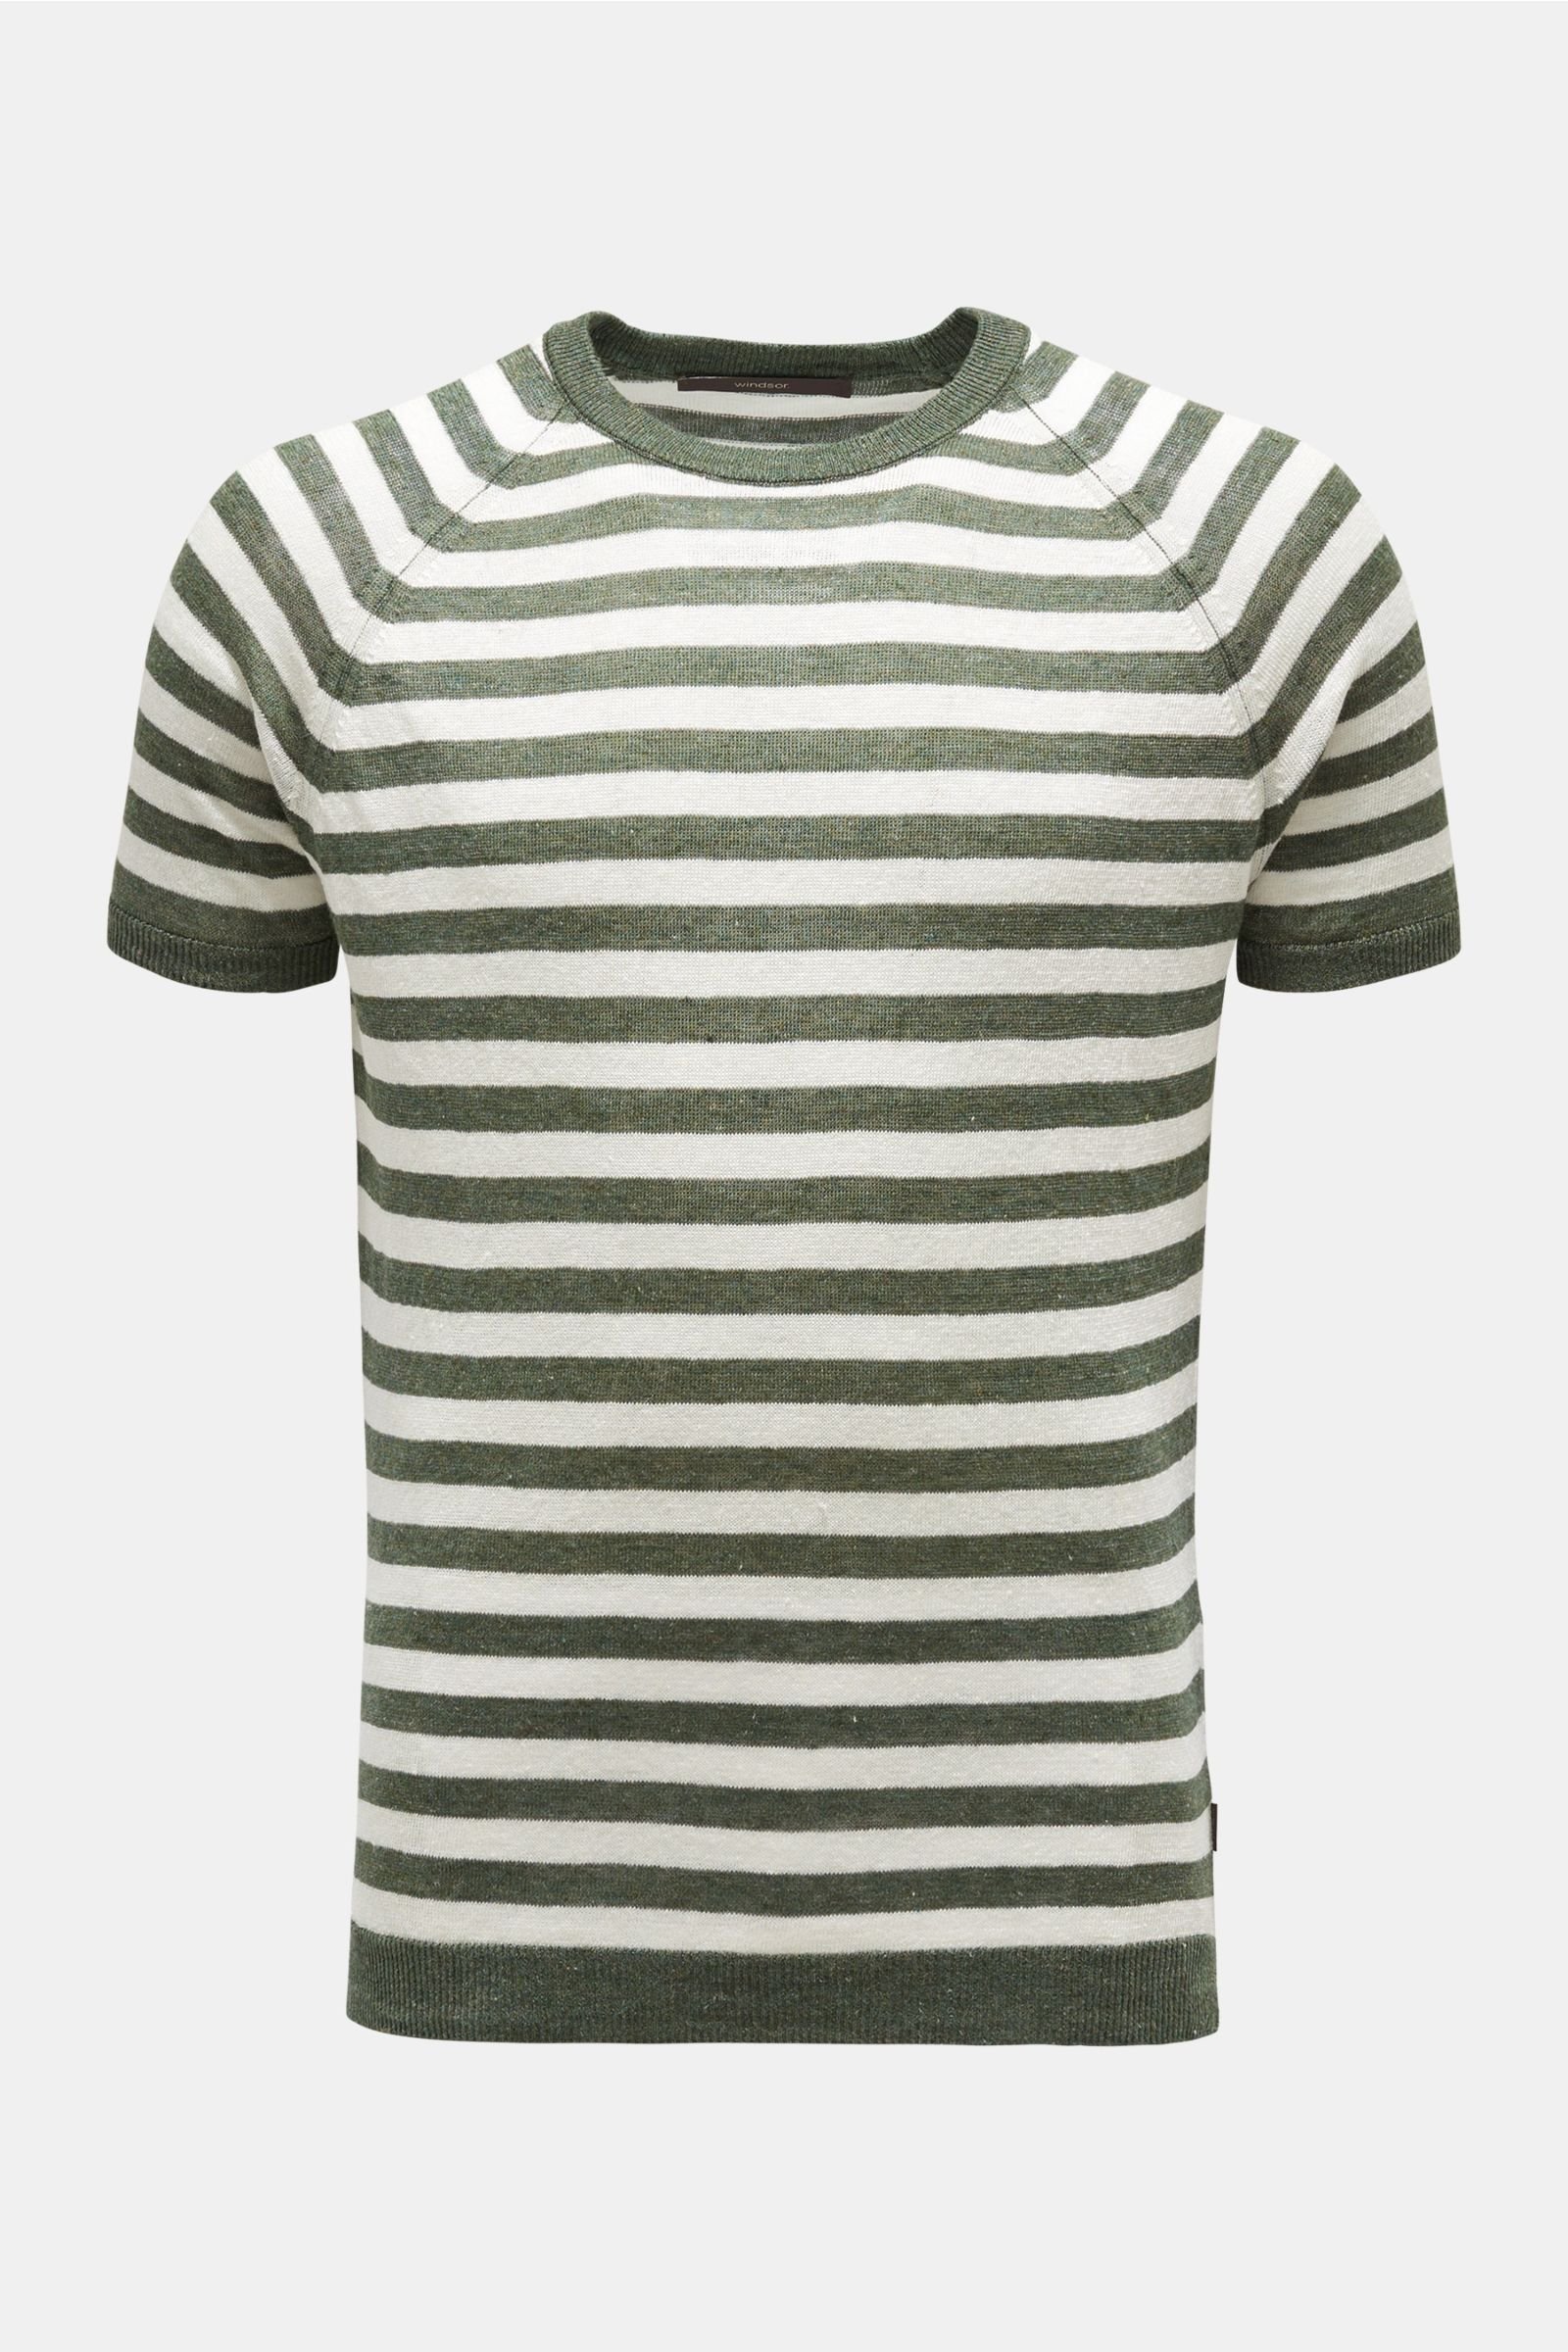 Linen short sleeve jumper dark green/off-white striped